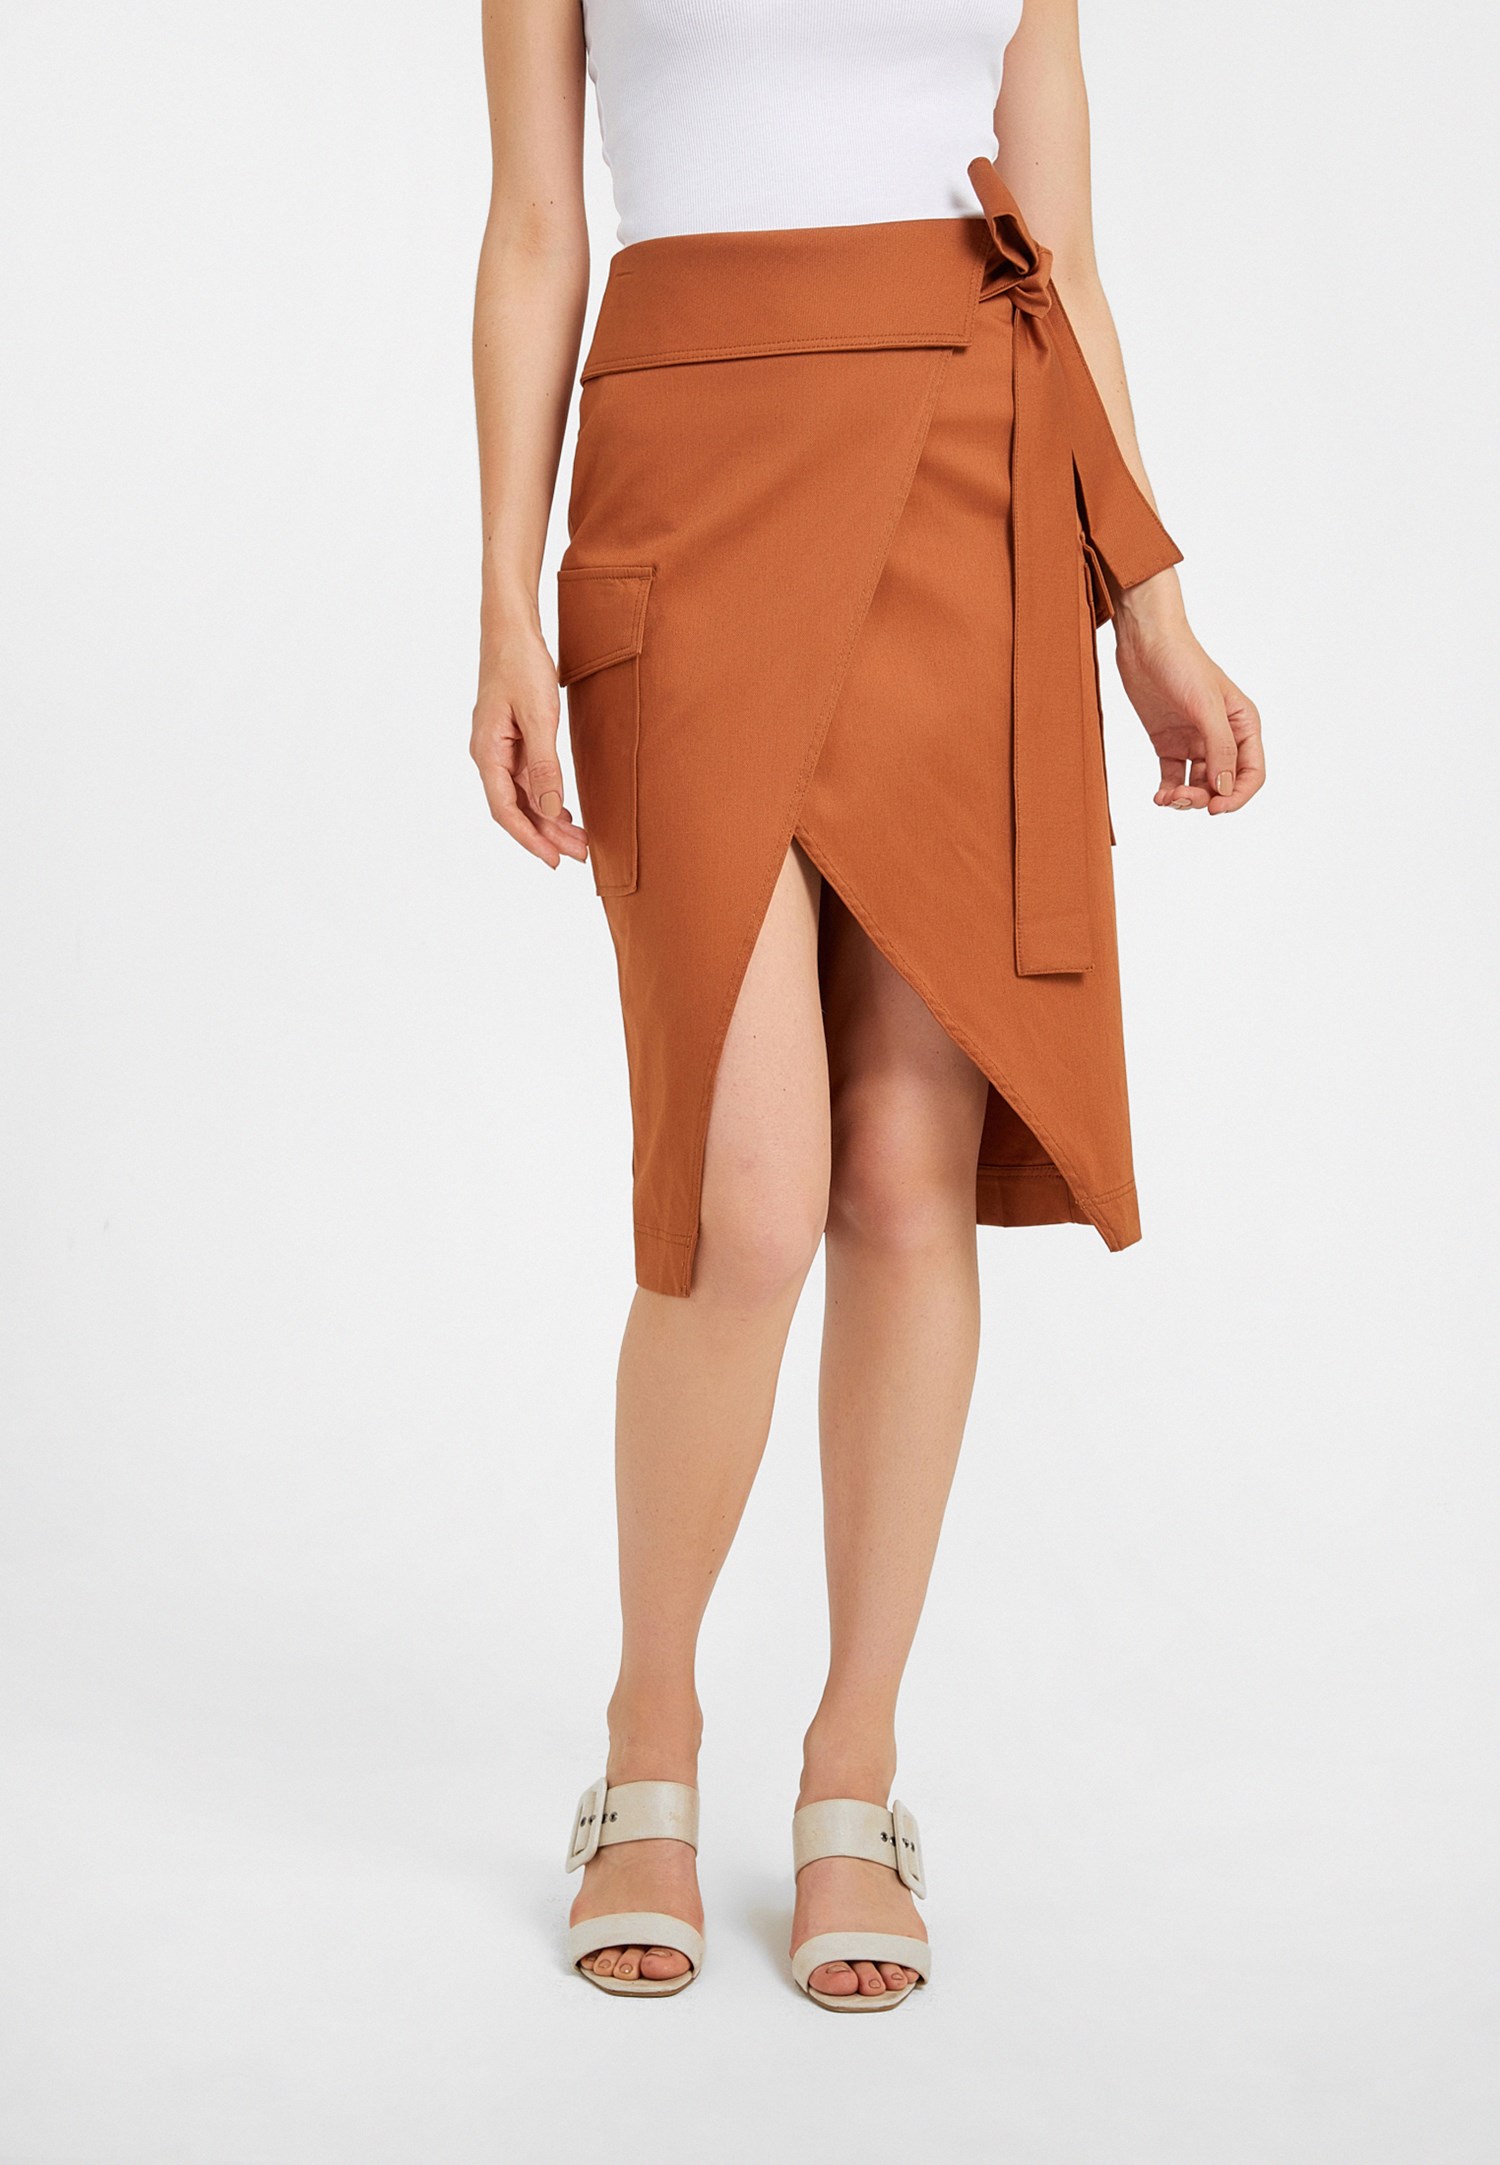 Women Brown Belt Detailed Skirt